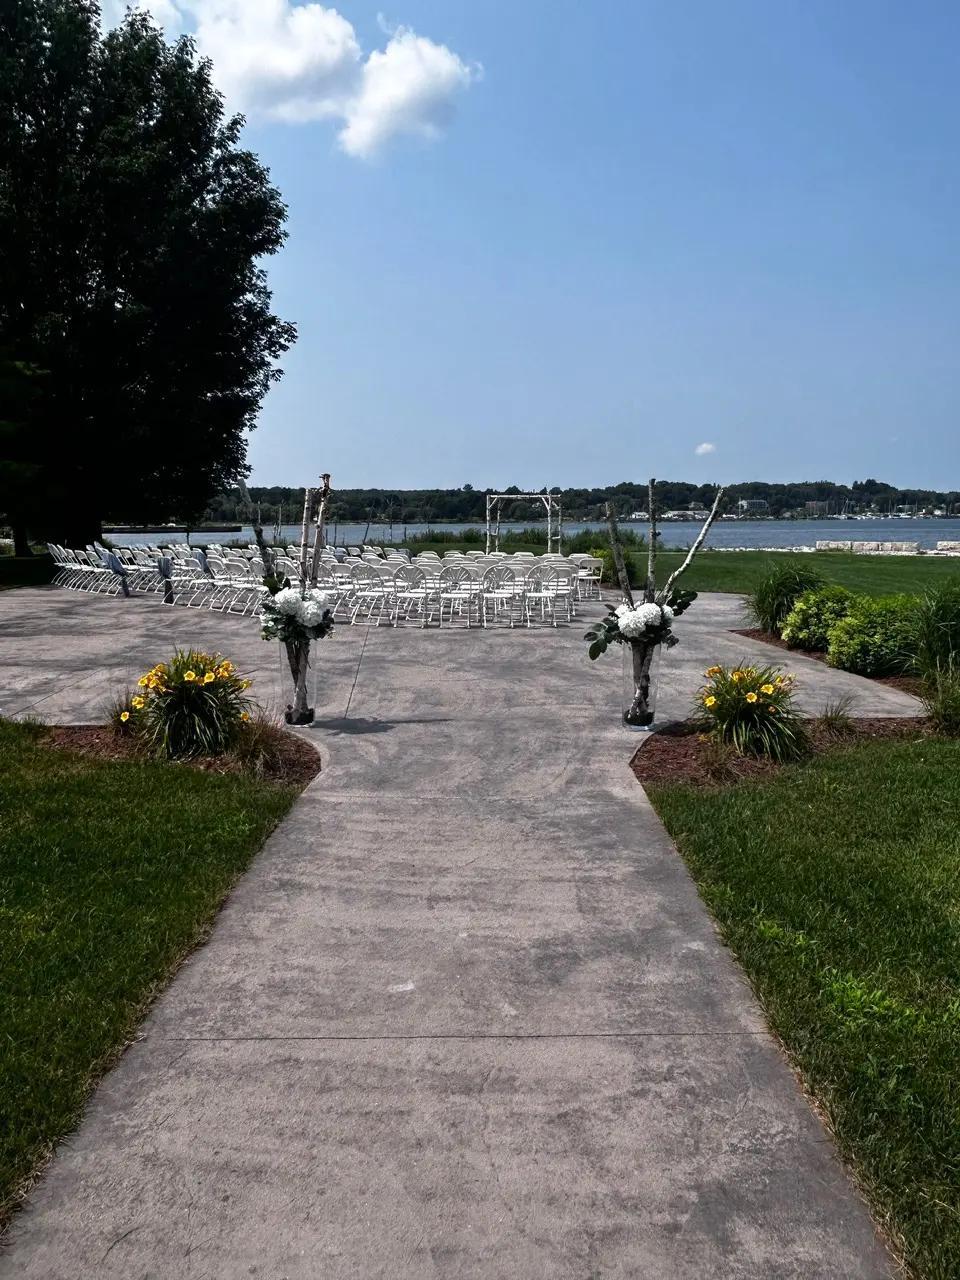 Weddings on the Bay, Owen Sound, Best Western, Destination Weddings in Ontario Canada